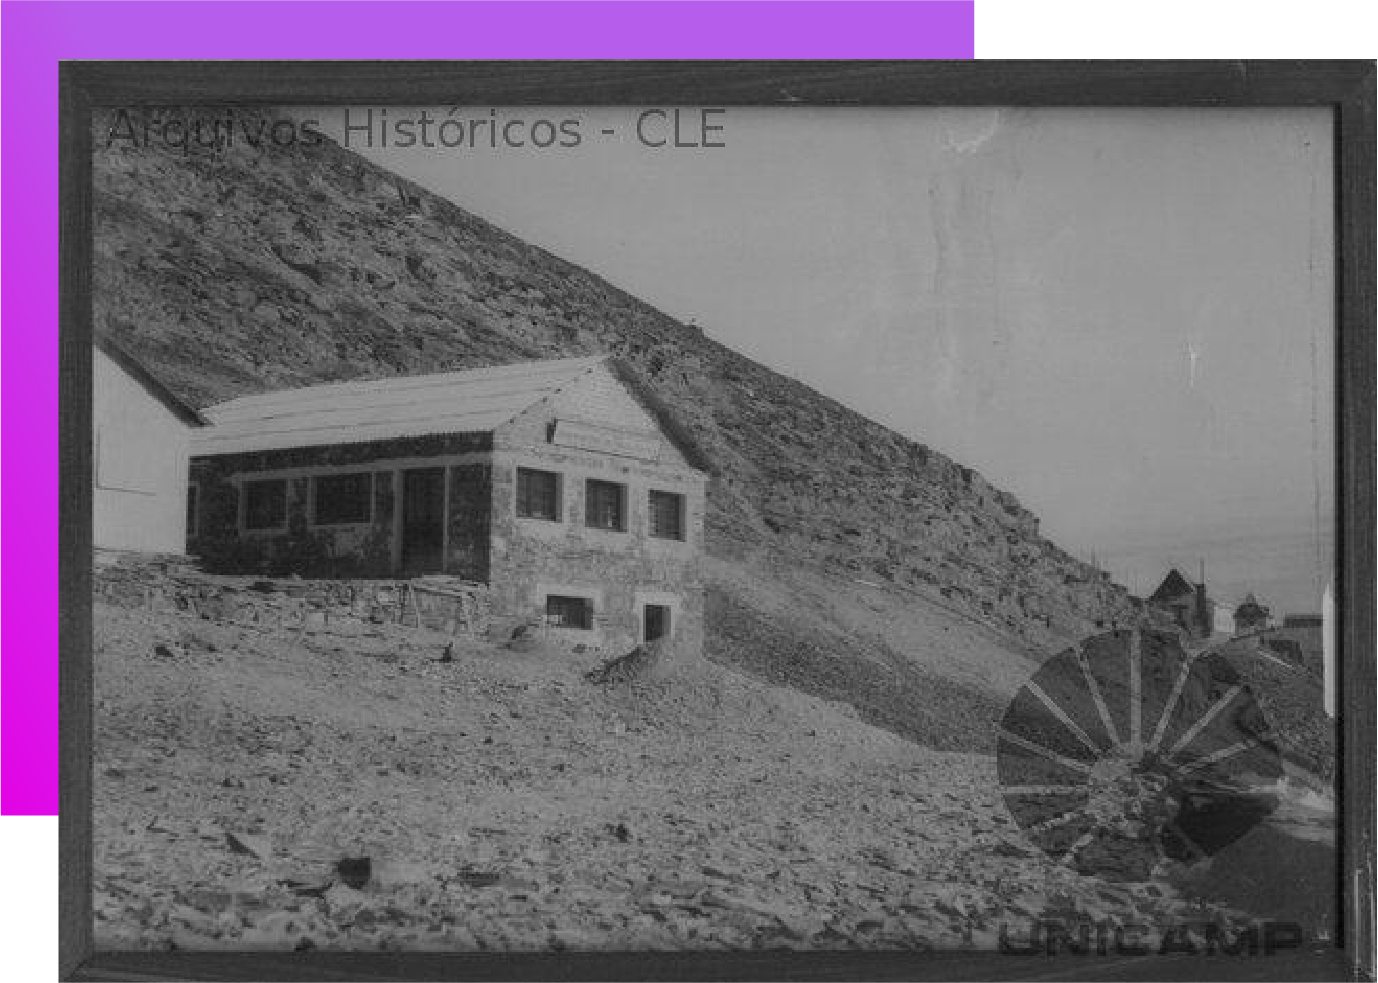 Observatório de Física Cósmica, Chacaltaya, Bolívia. 1947. Acervo César Lattes, Arquivos Históricos CLE Unicamp.